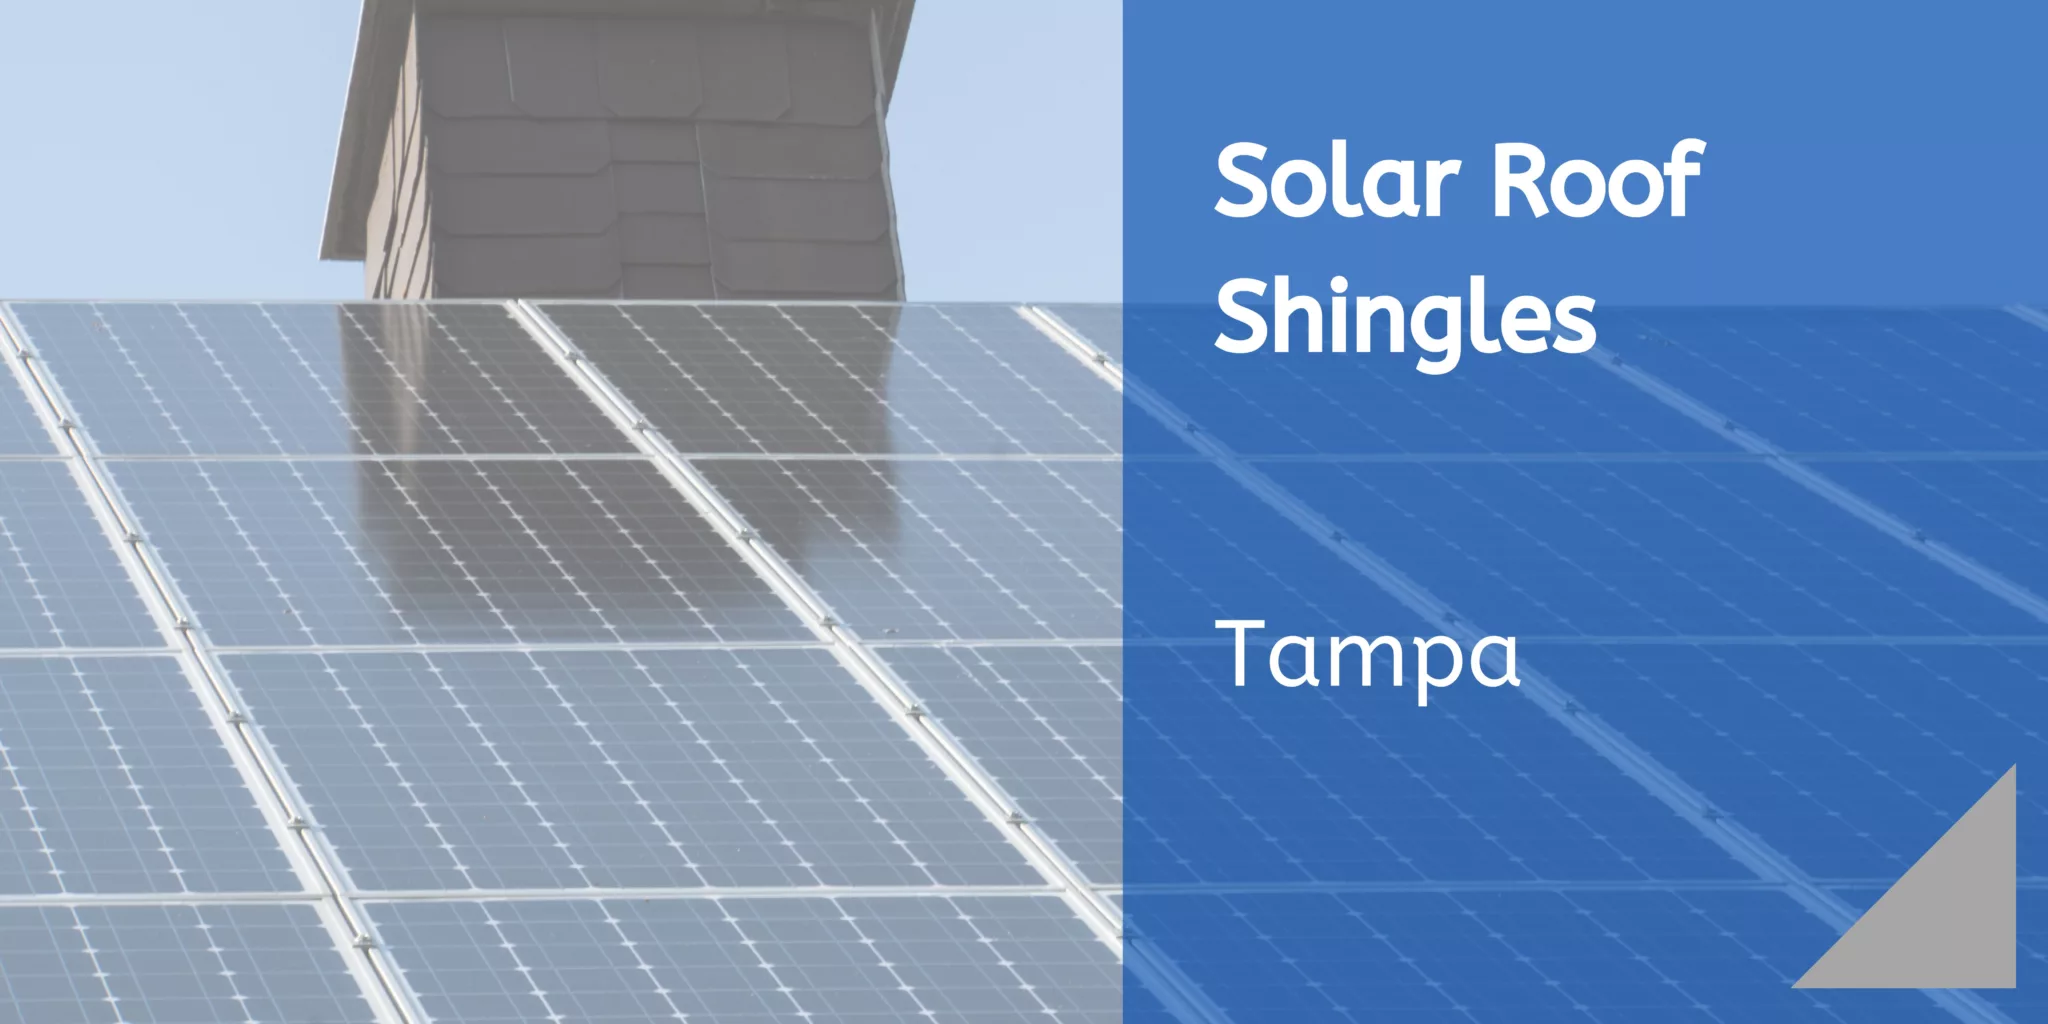 Tampa Solar Roof Shingles